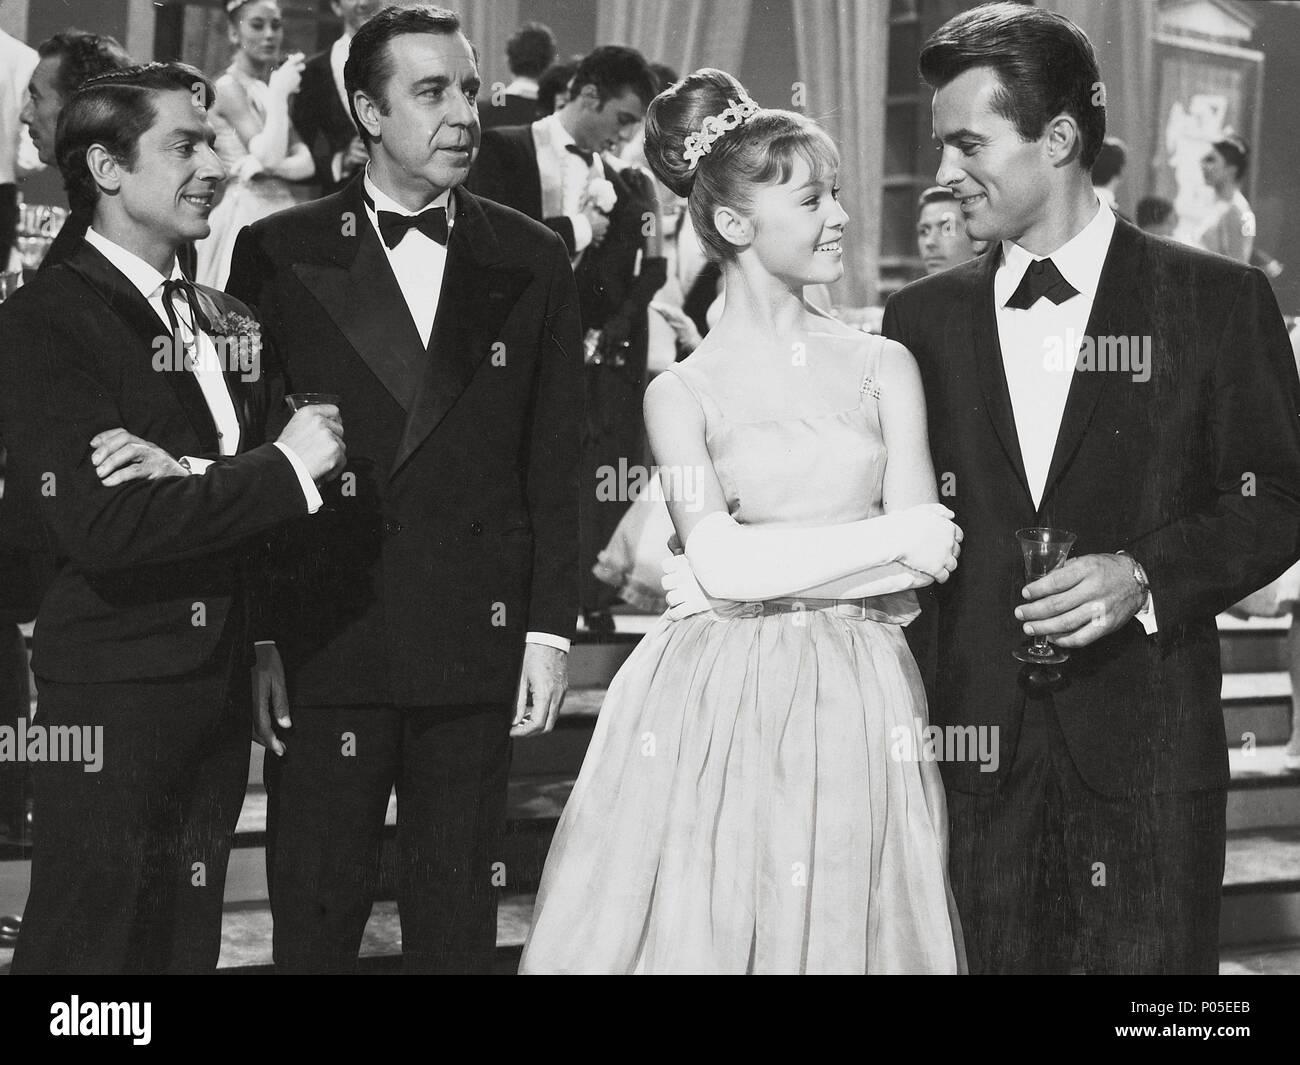 Original Film Title: LA NUEVA CENICIENTA.  English Title: NEW CINDERELLA, THE.  Film Director: GEORGE SHERMAN.  Year: 1964.  Stars: ANTONIO; FERNANDO REY; MARISOL; ROBERT CONRAD. Stock Photo